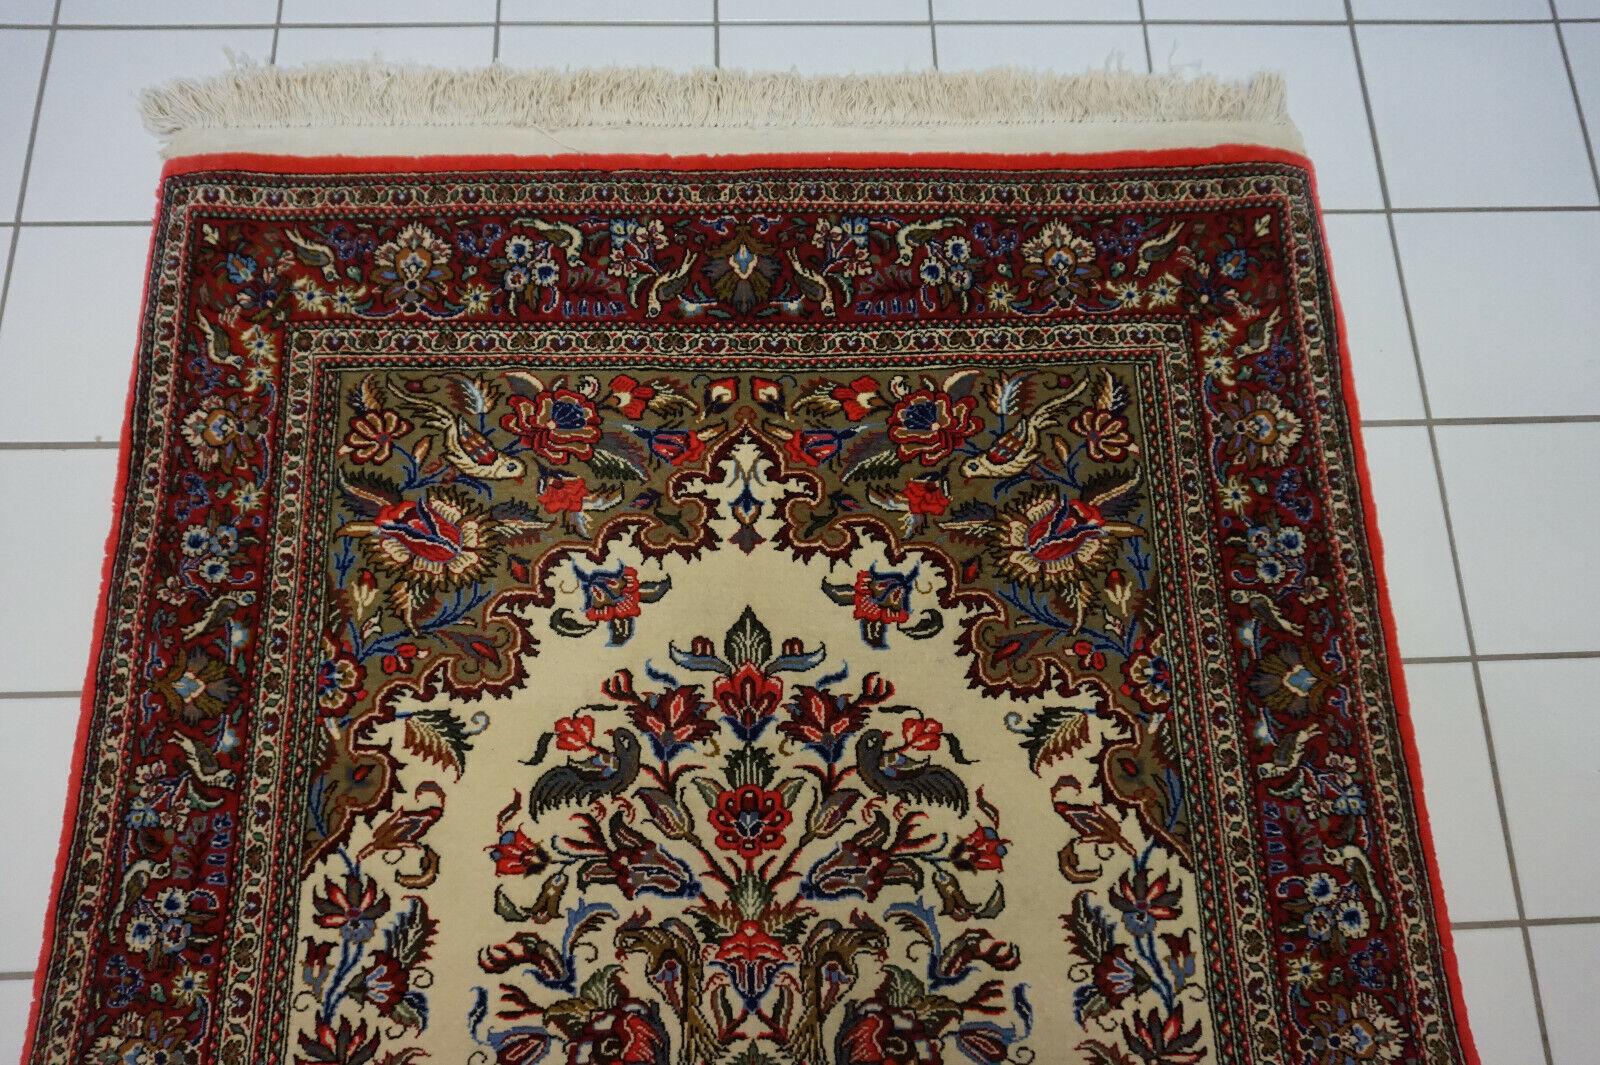 Wool Handmade Vintage Persian Style Qum Prayer Rug 3.4' x 5.4', 1970s - 1D49 For Sale